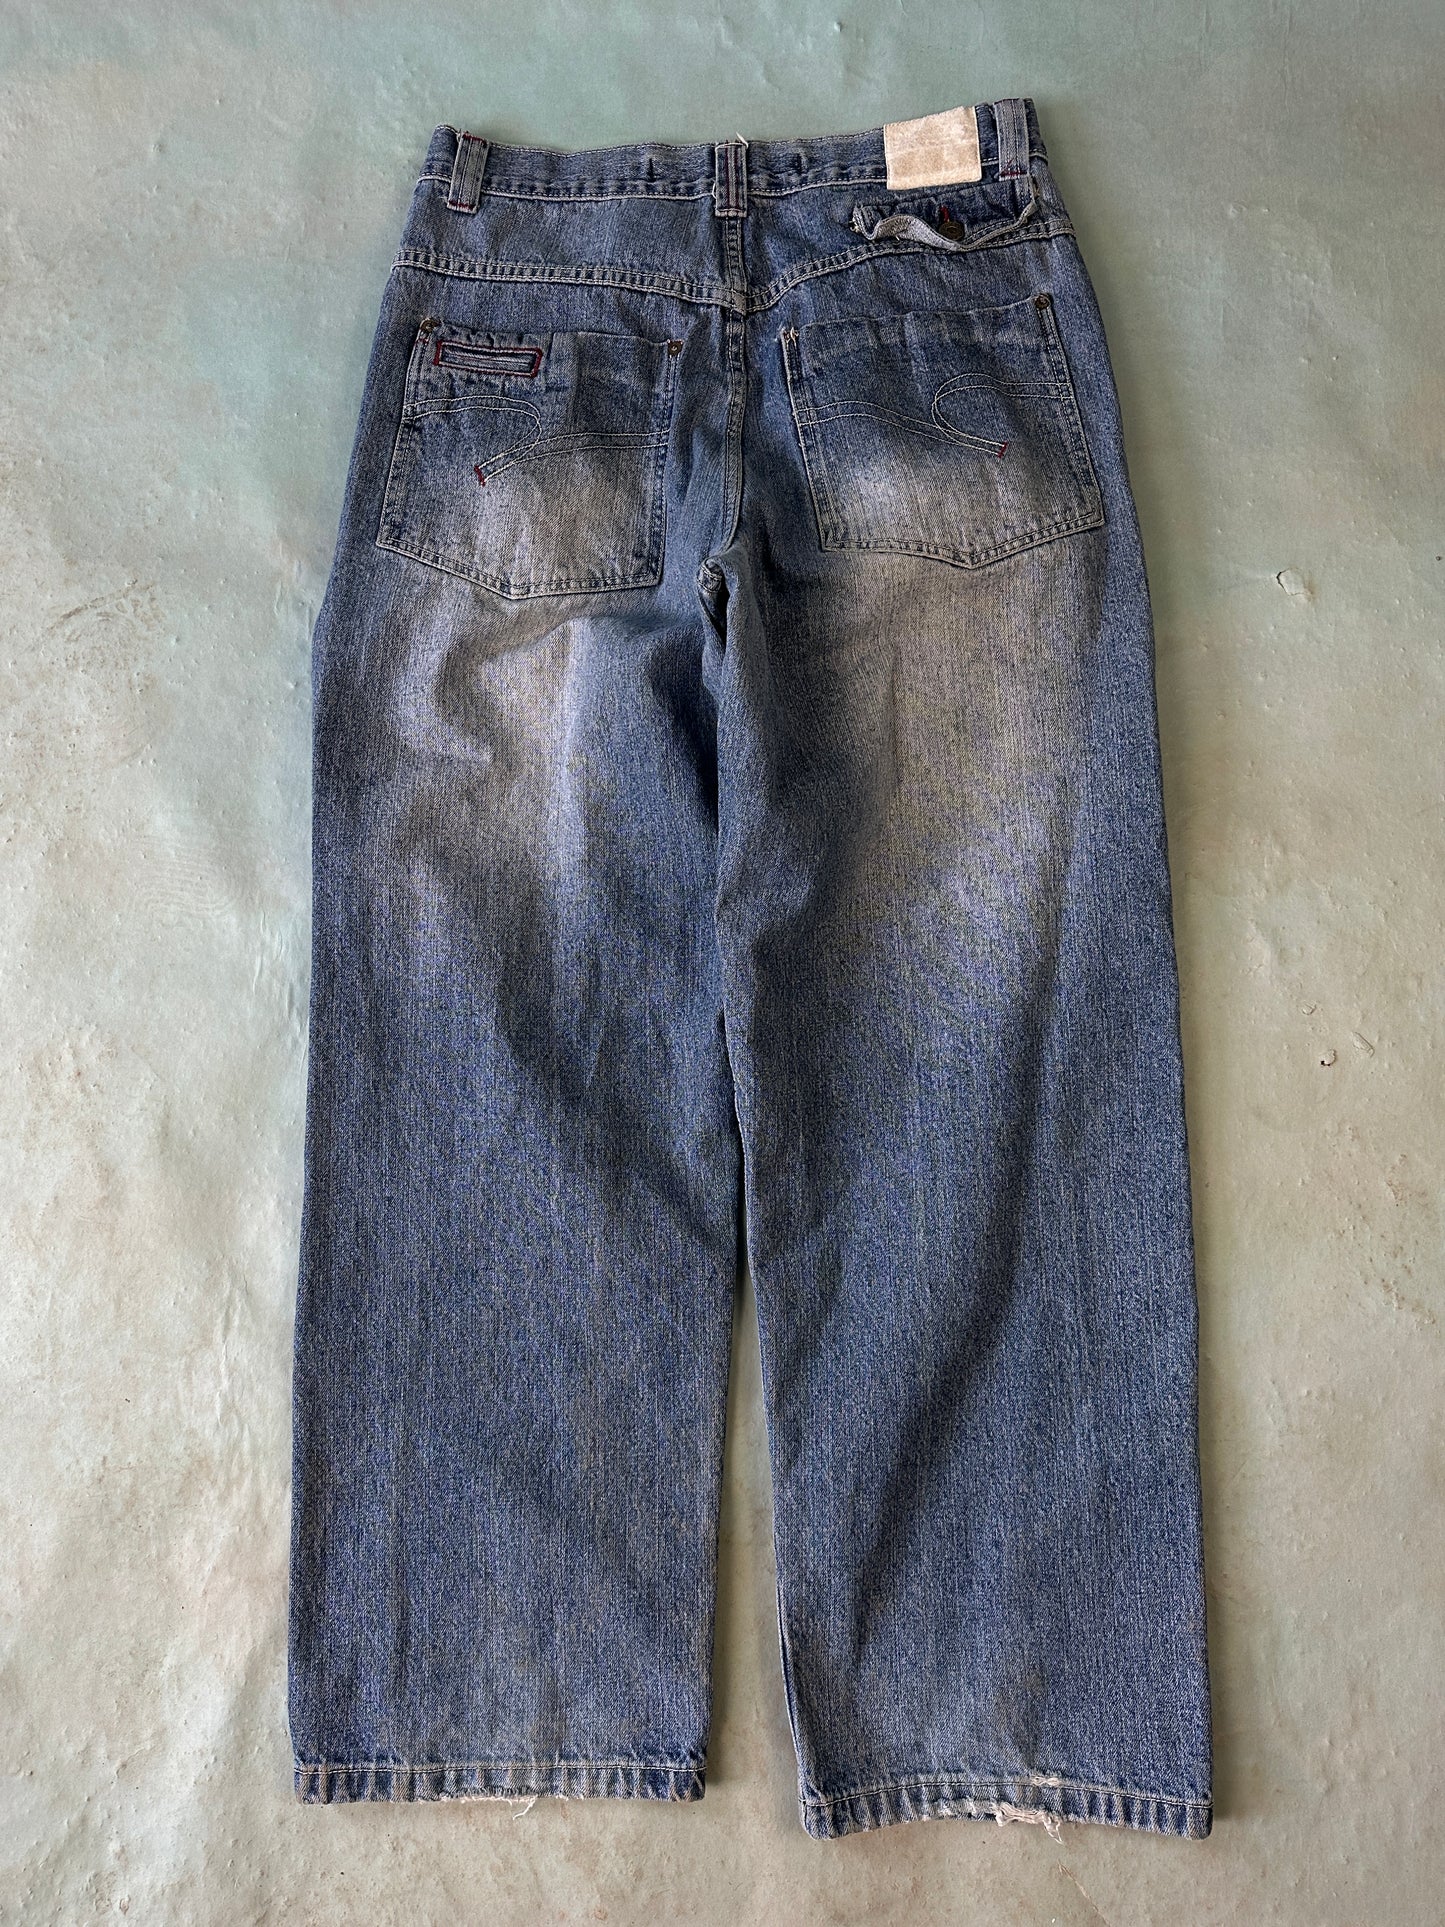 Paco Jeans Vintage Multipocket Denim - 34 x 32